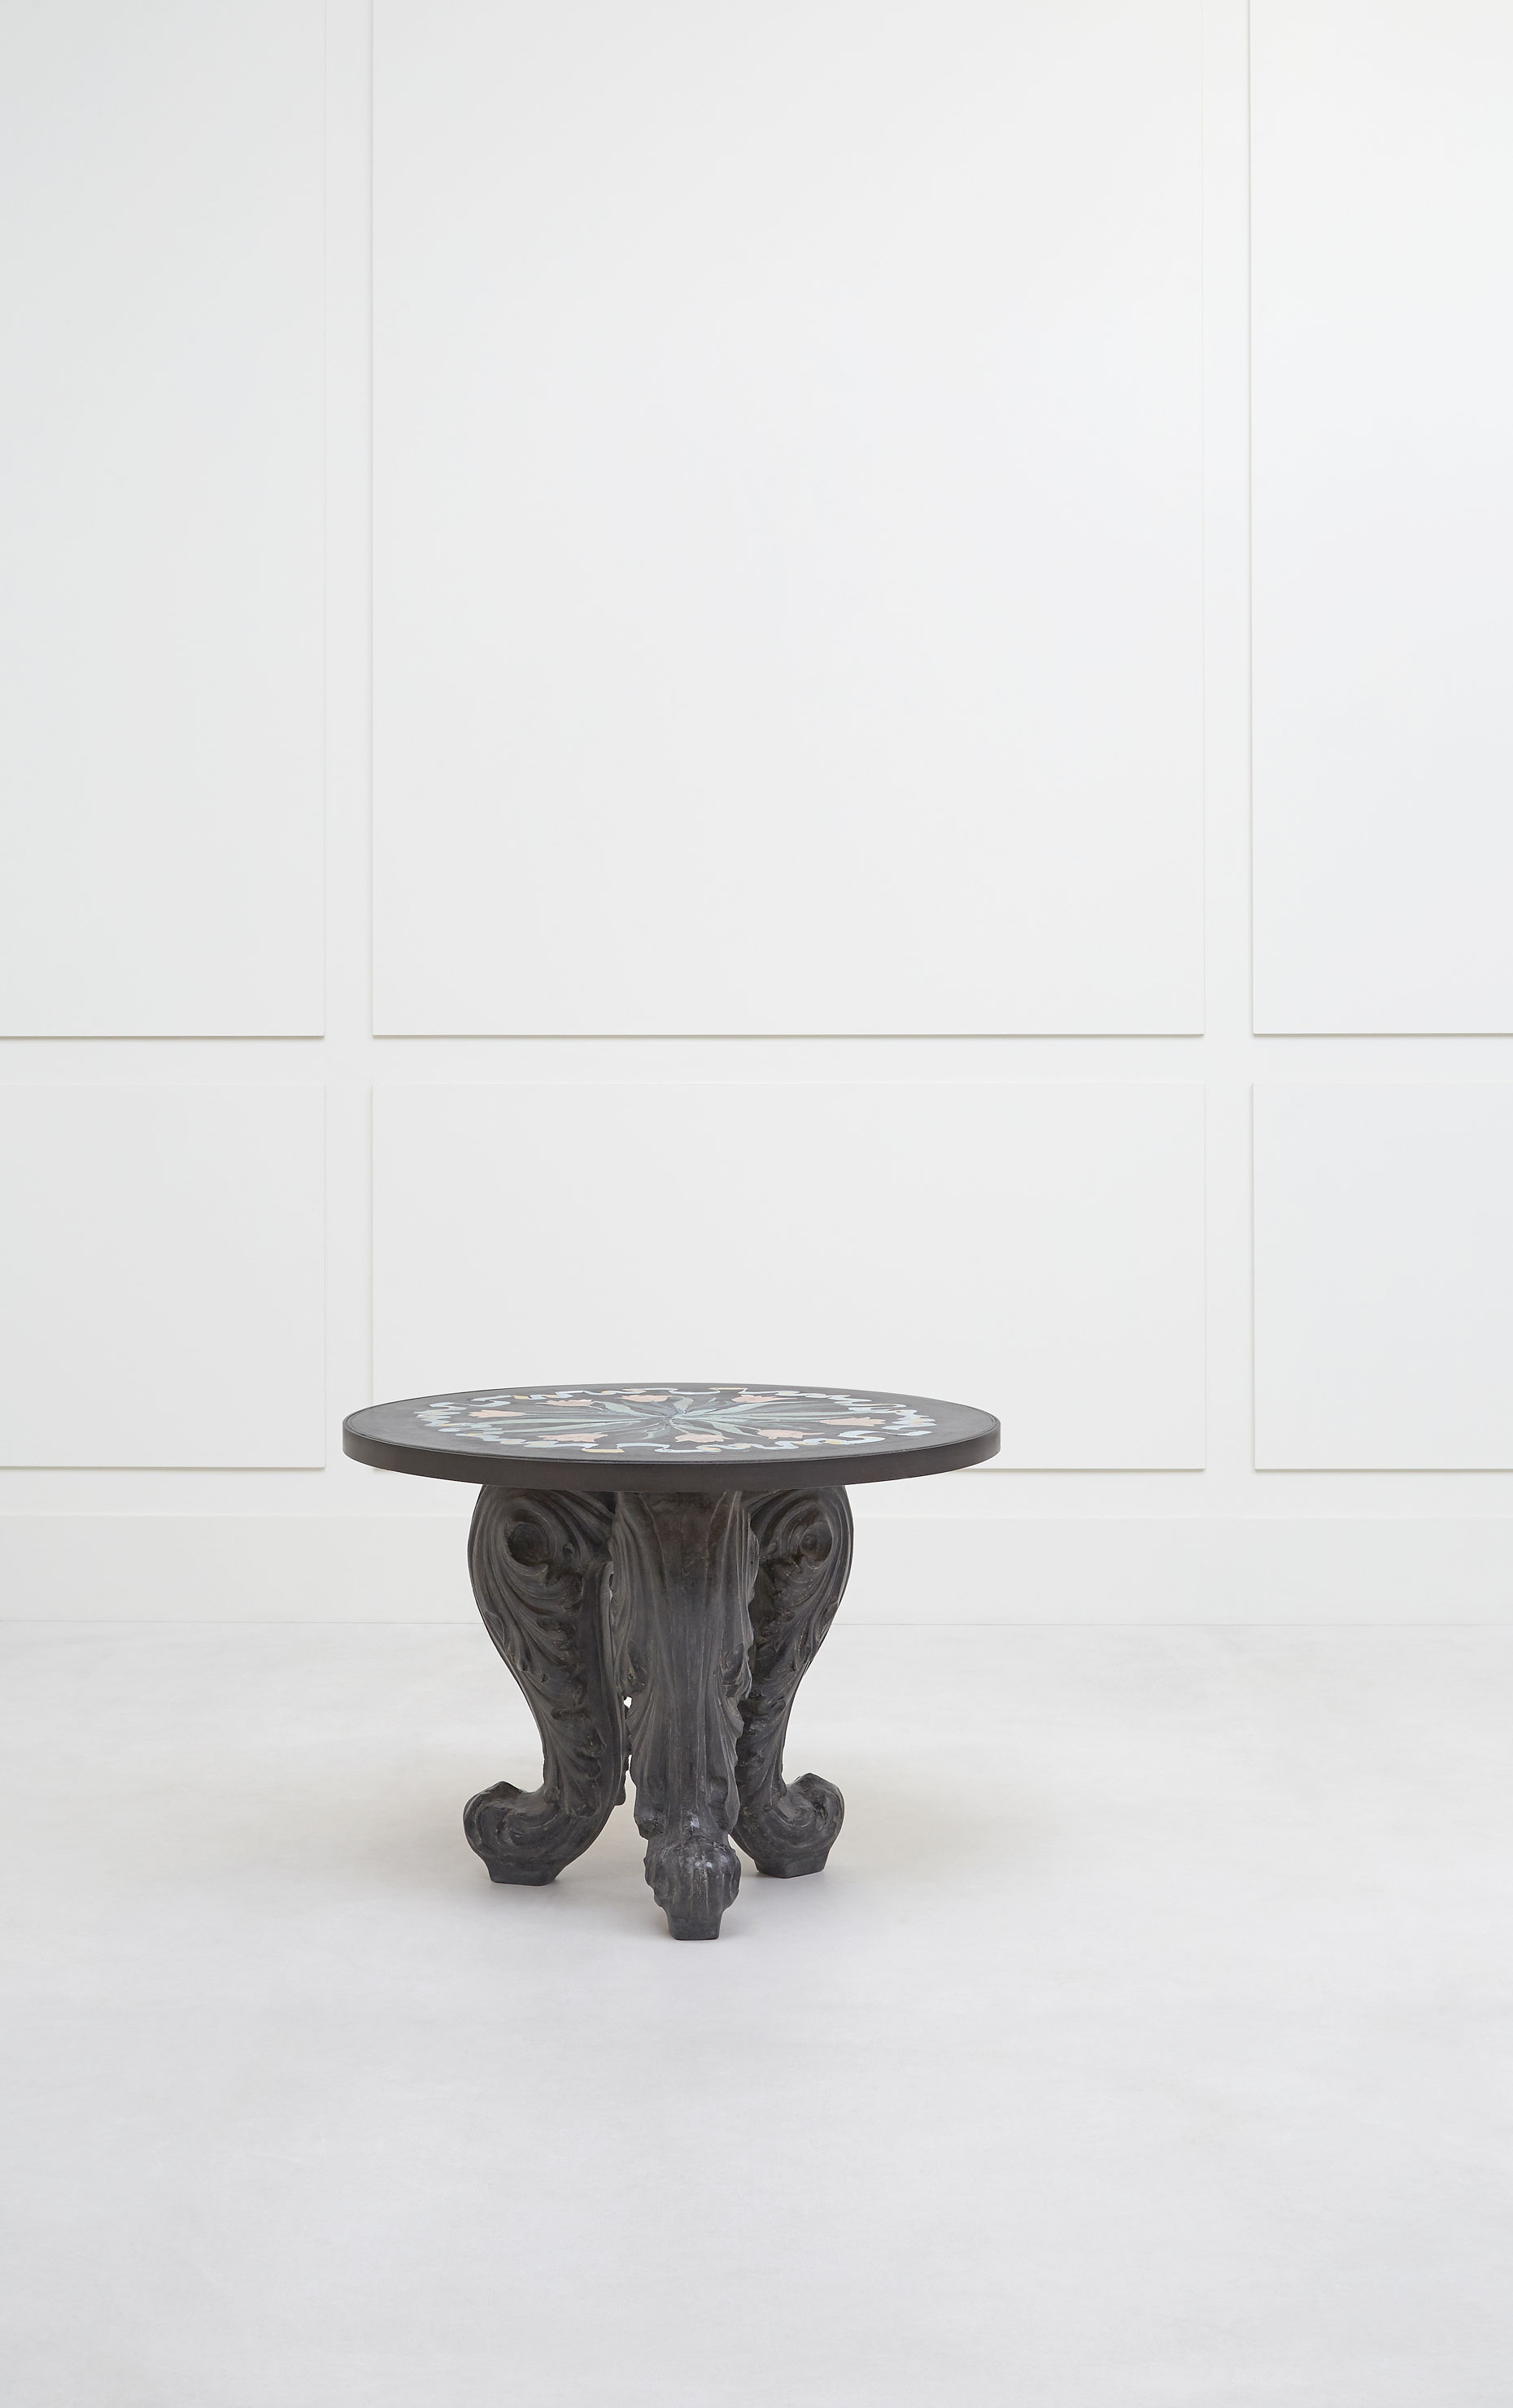 Serge Roche & Ismael De La Serna, Pedestal table, vue 01